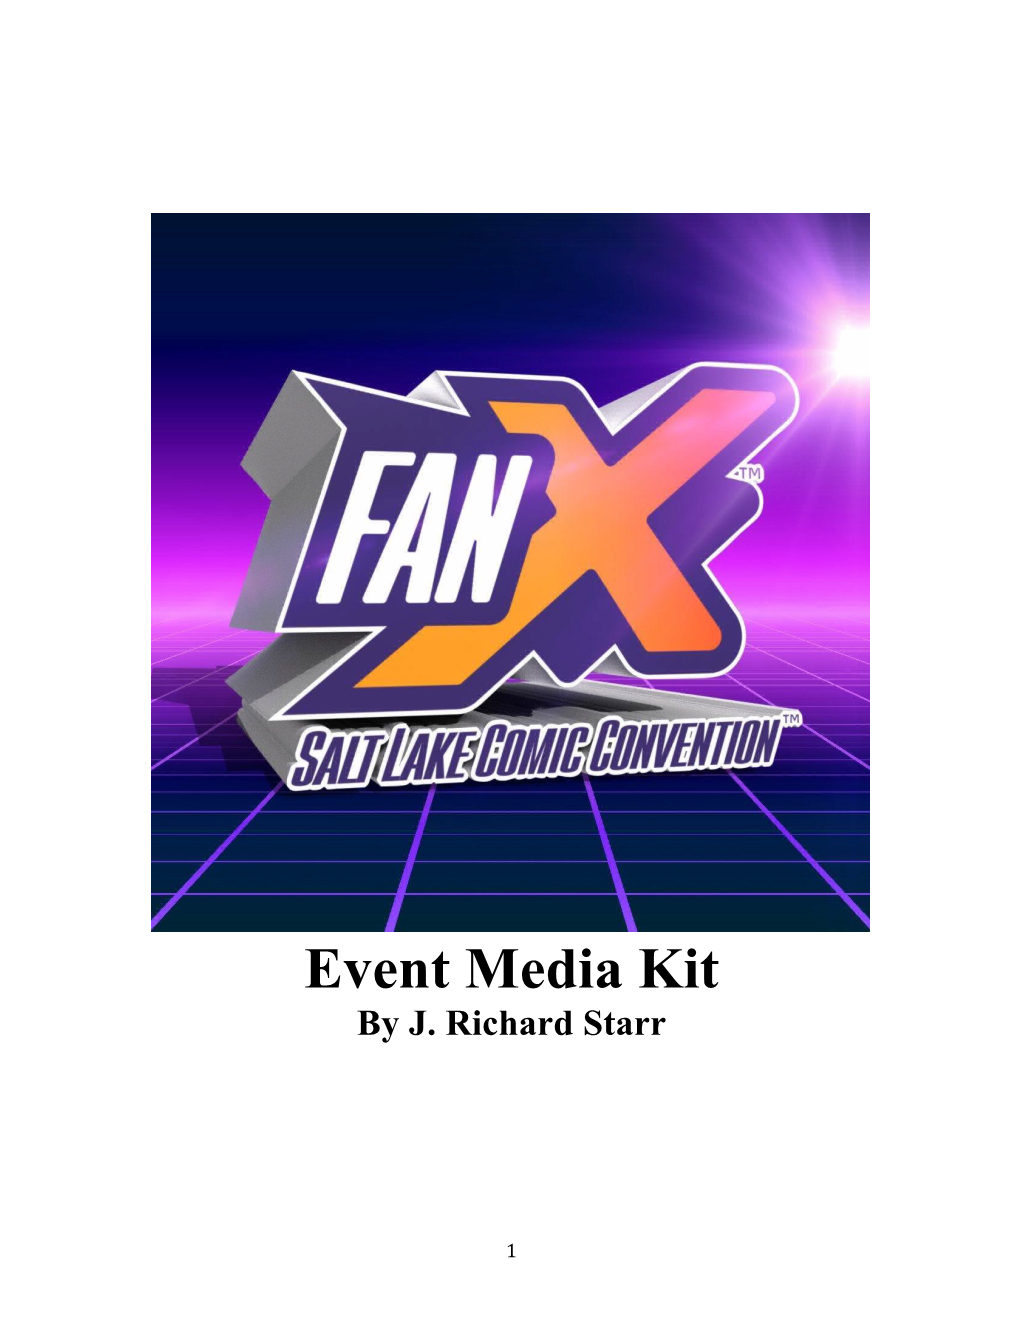 Event Media Kit by J